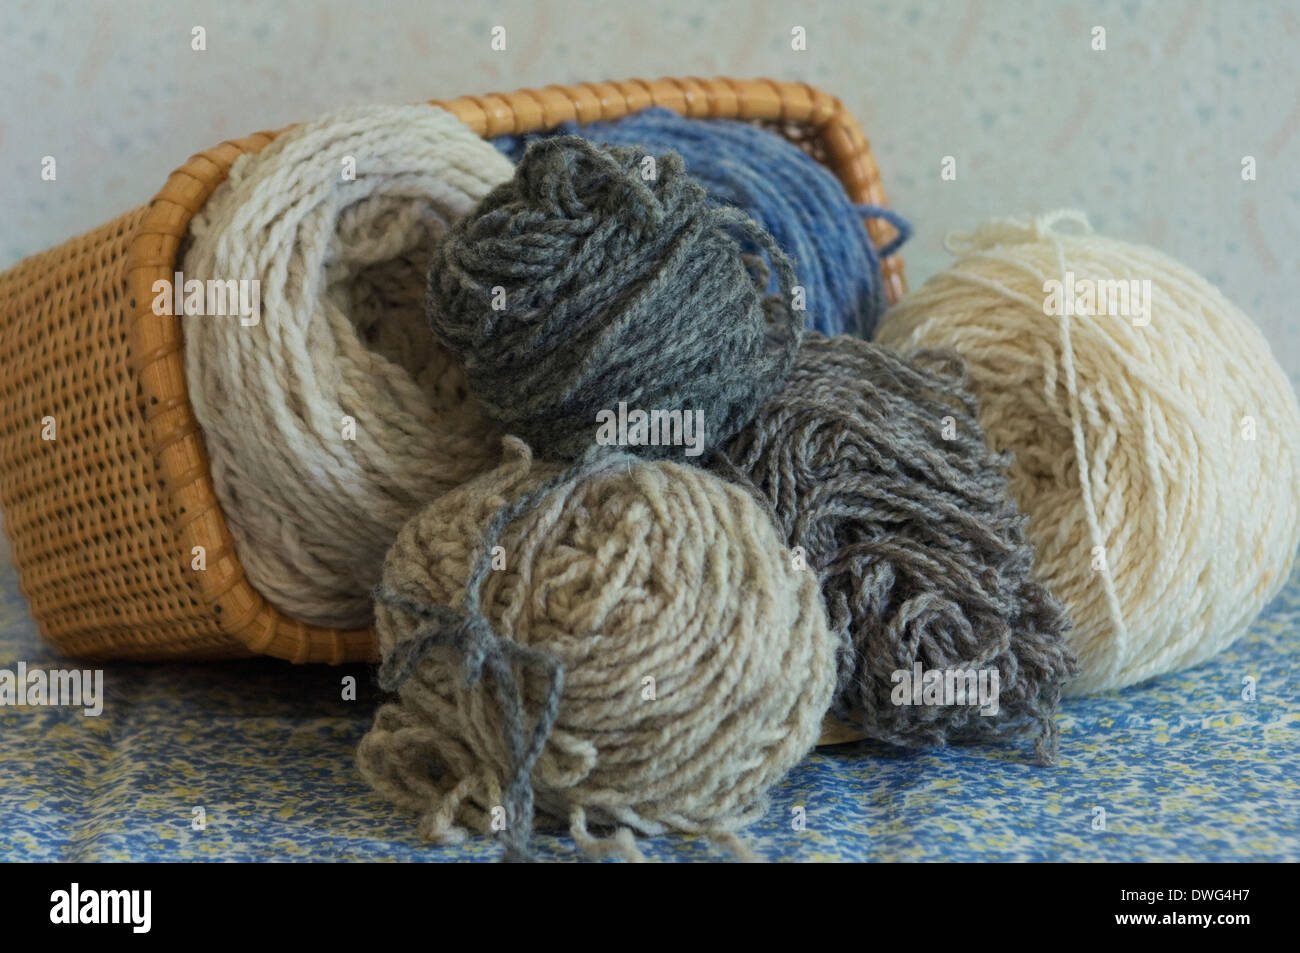 Basket of wool yarn. Digital photograph Stock Photo